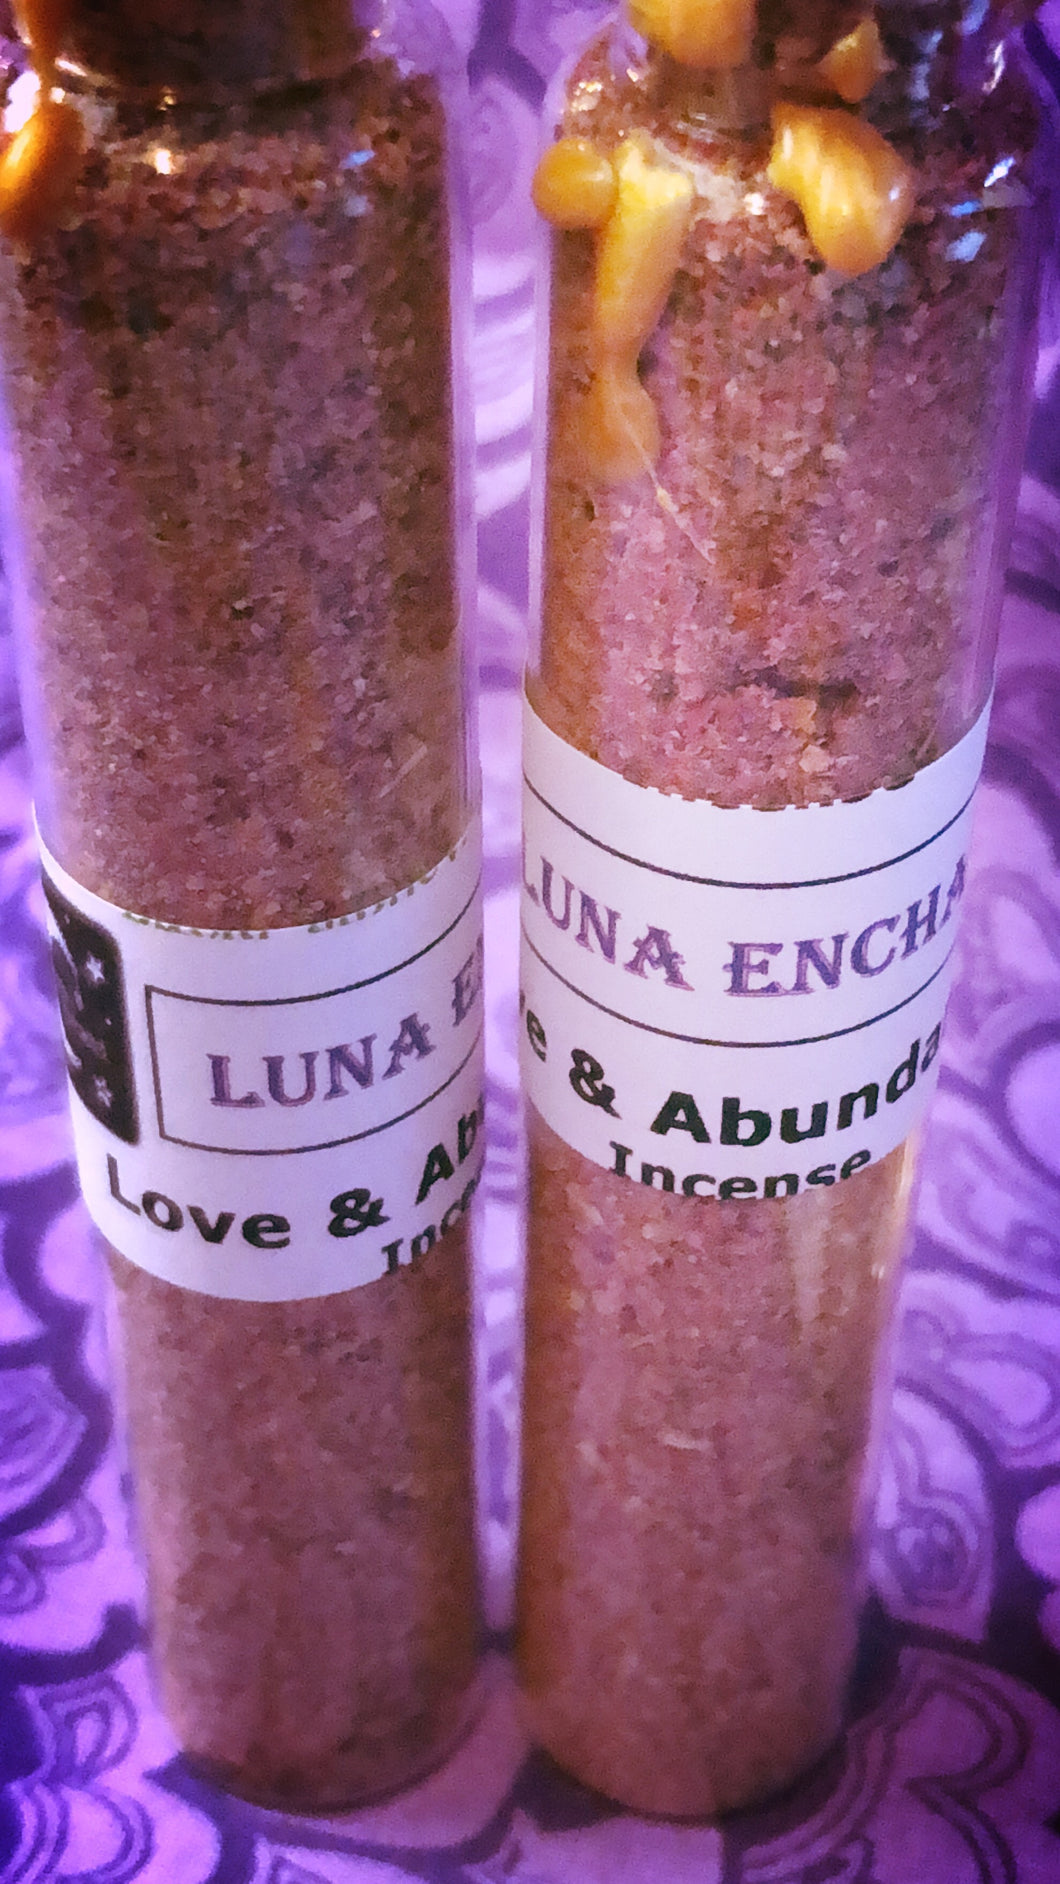 Love and Abundance Incense